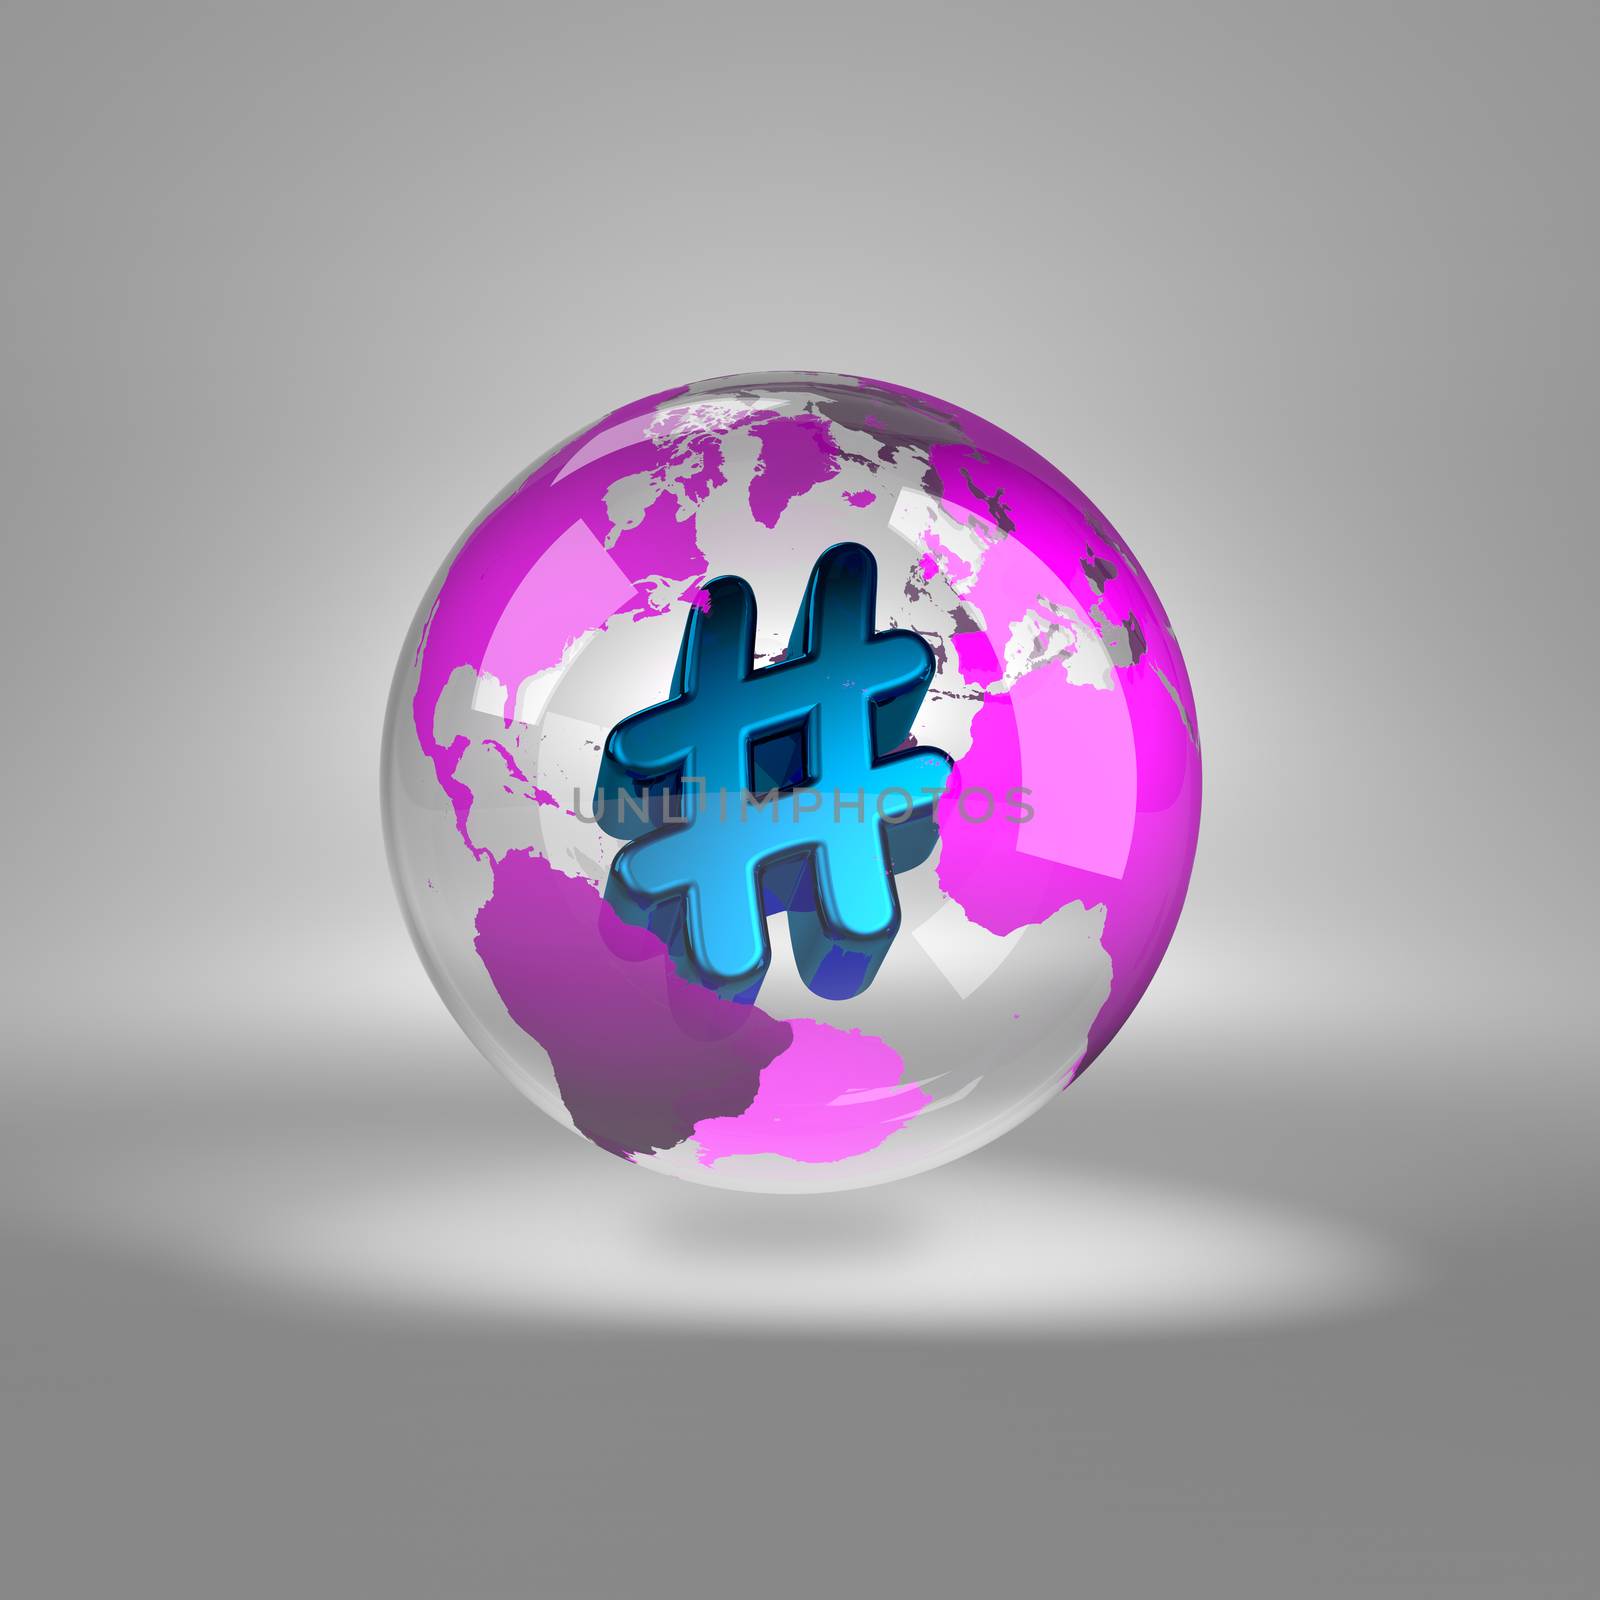 Hashtag Symbol into a Transparent World Globe by make